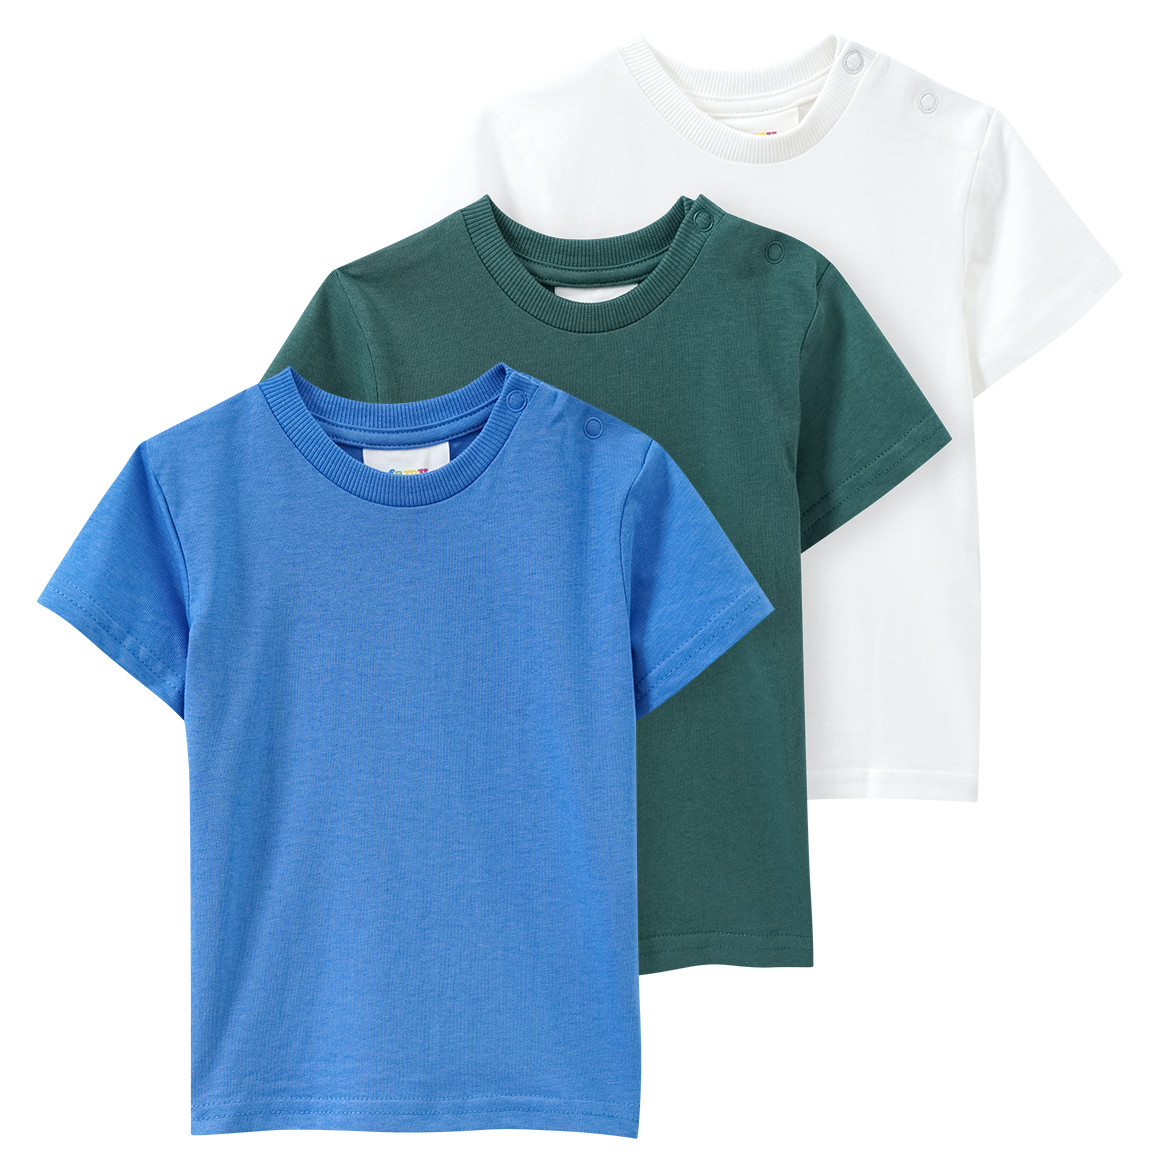 3 Baby T-Shirts unifarben von Topomini